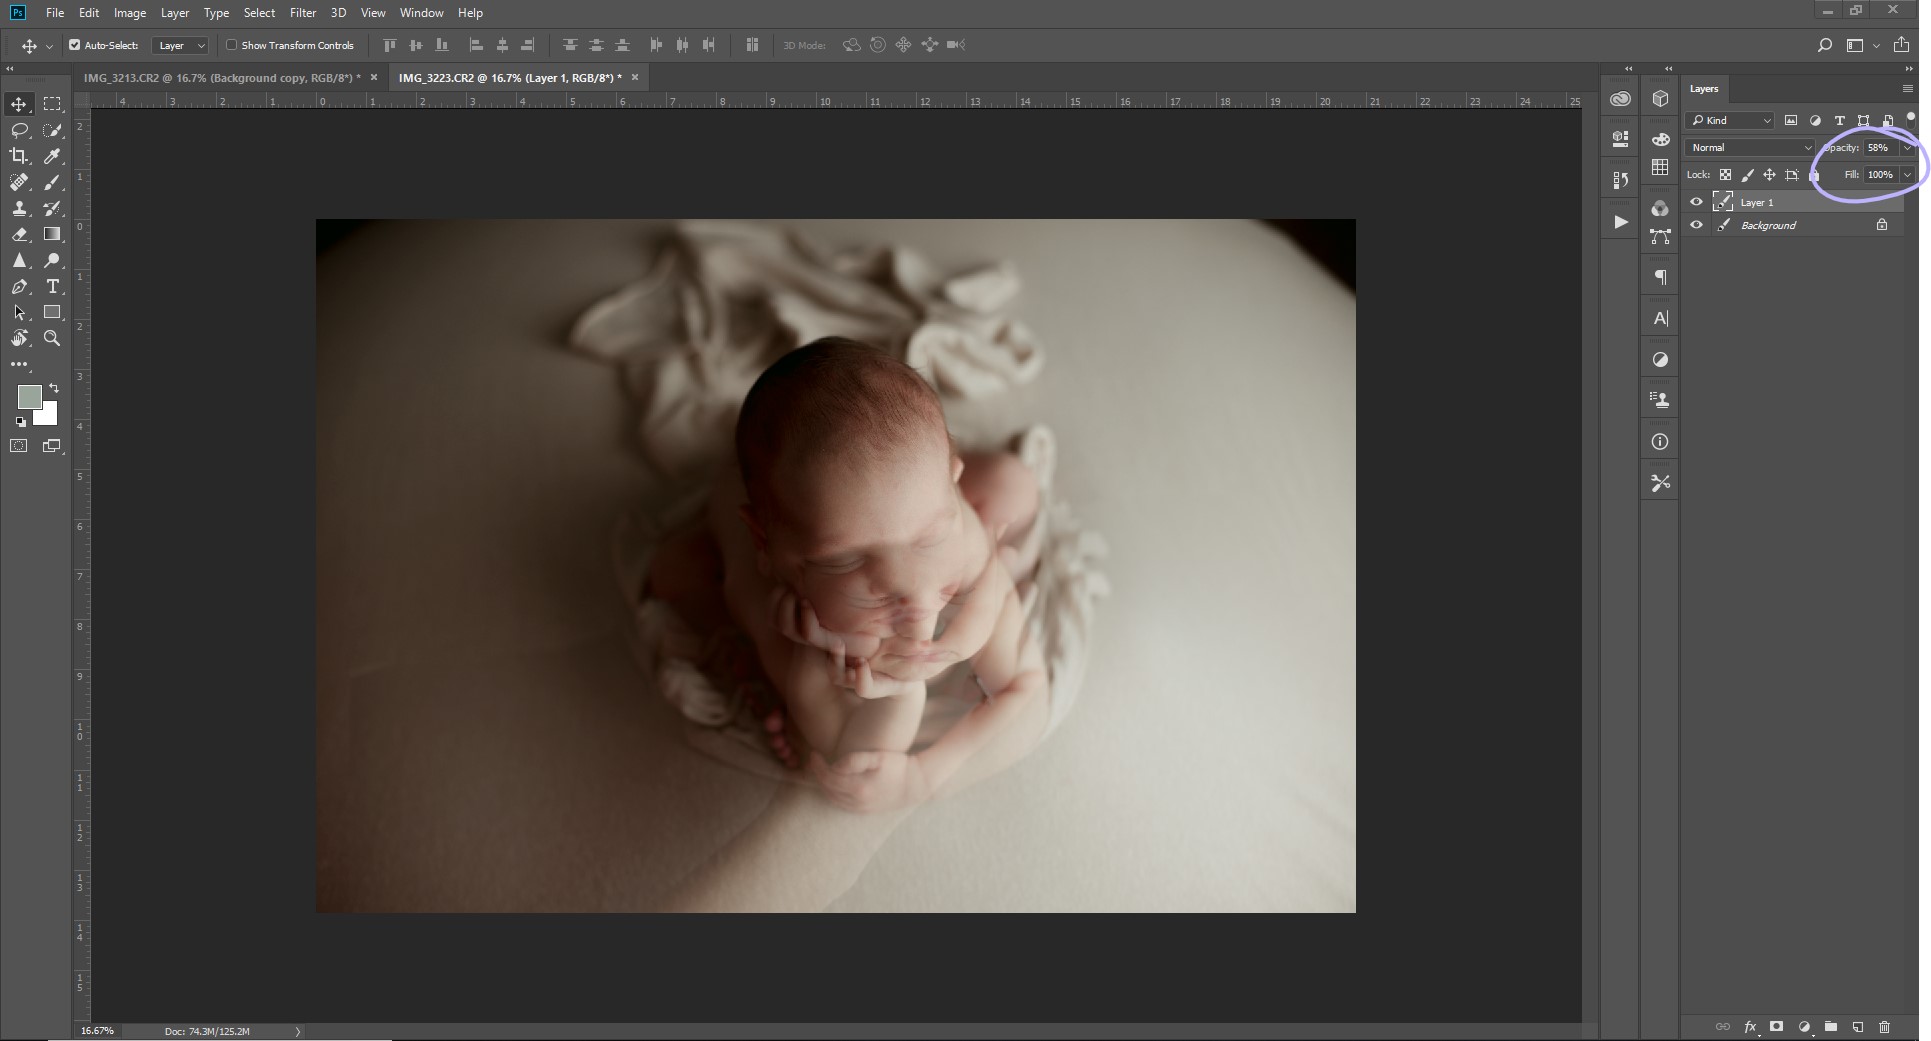 newborn photography austin tx